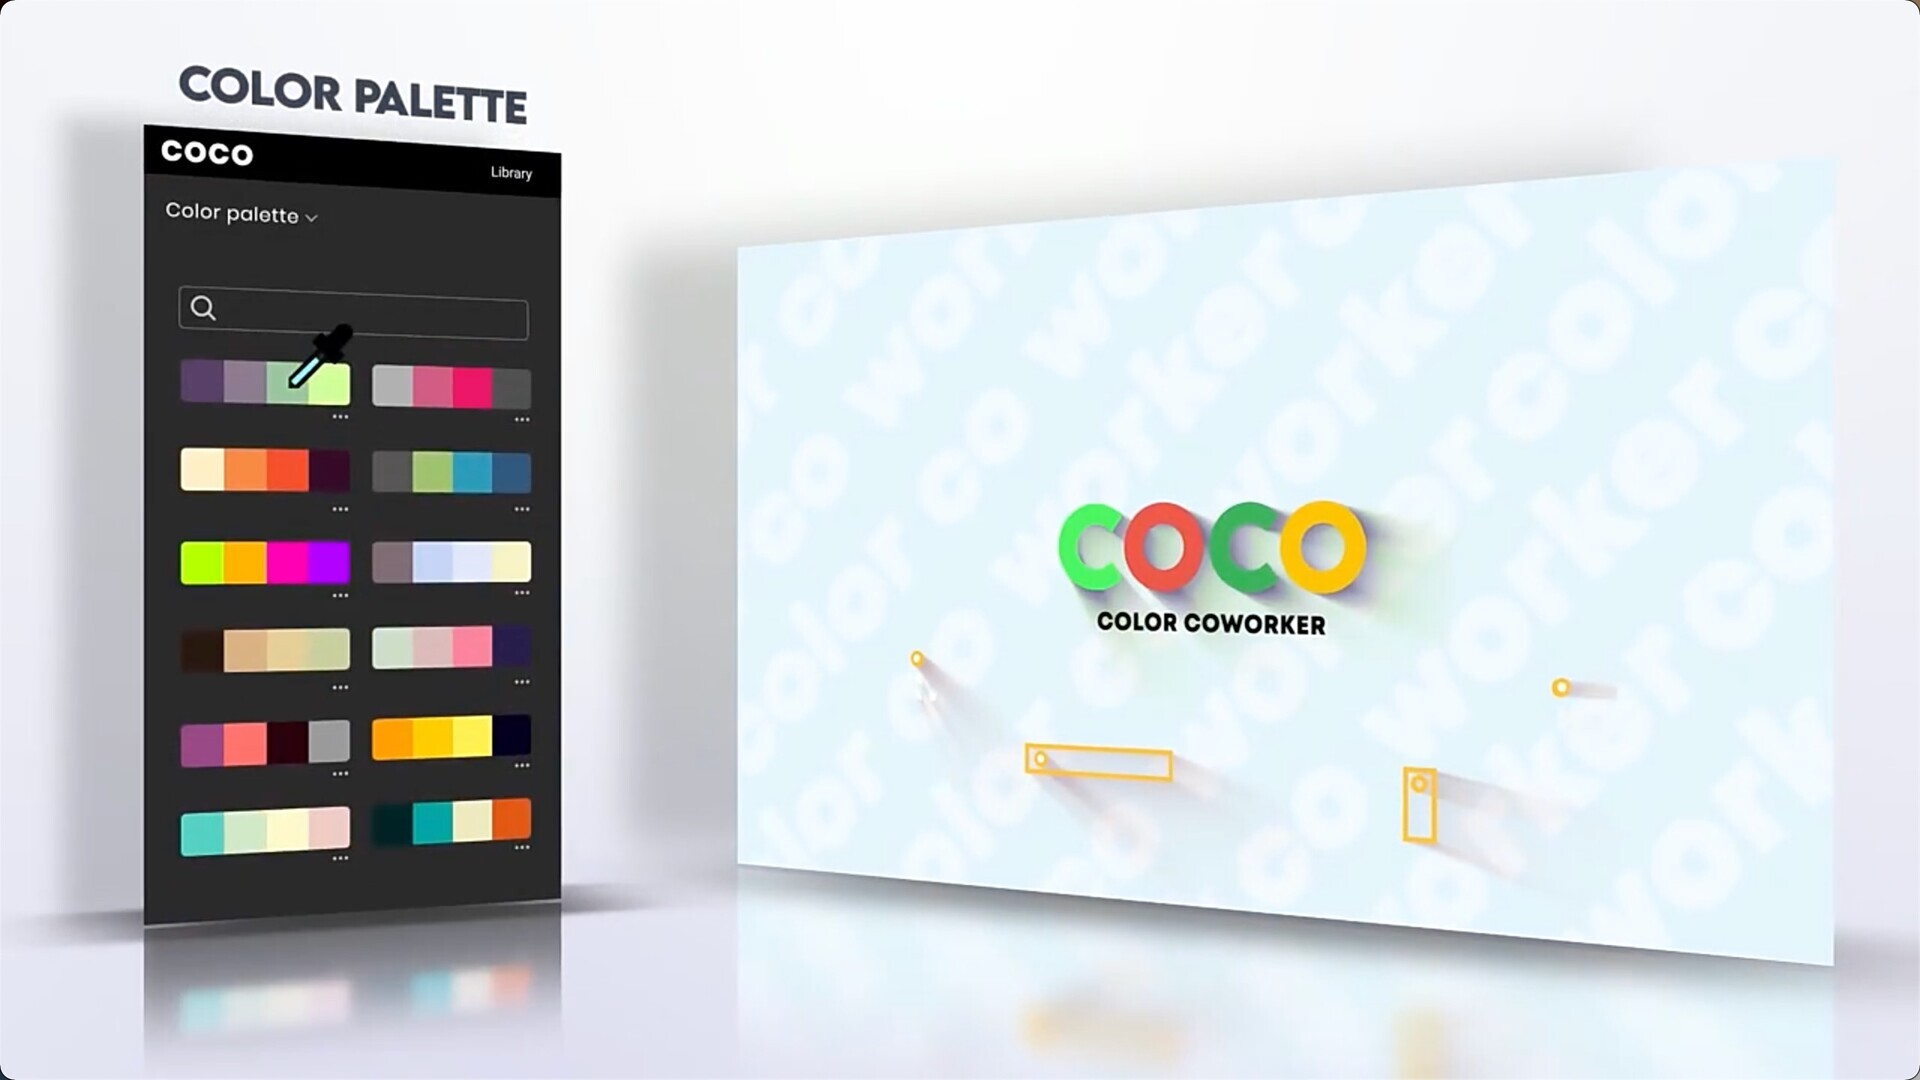 Coco Color CoWorker for mac(AE脚本-高级调色板配色表应用工具)